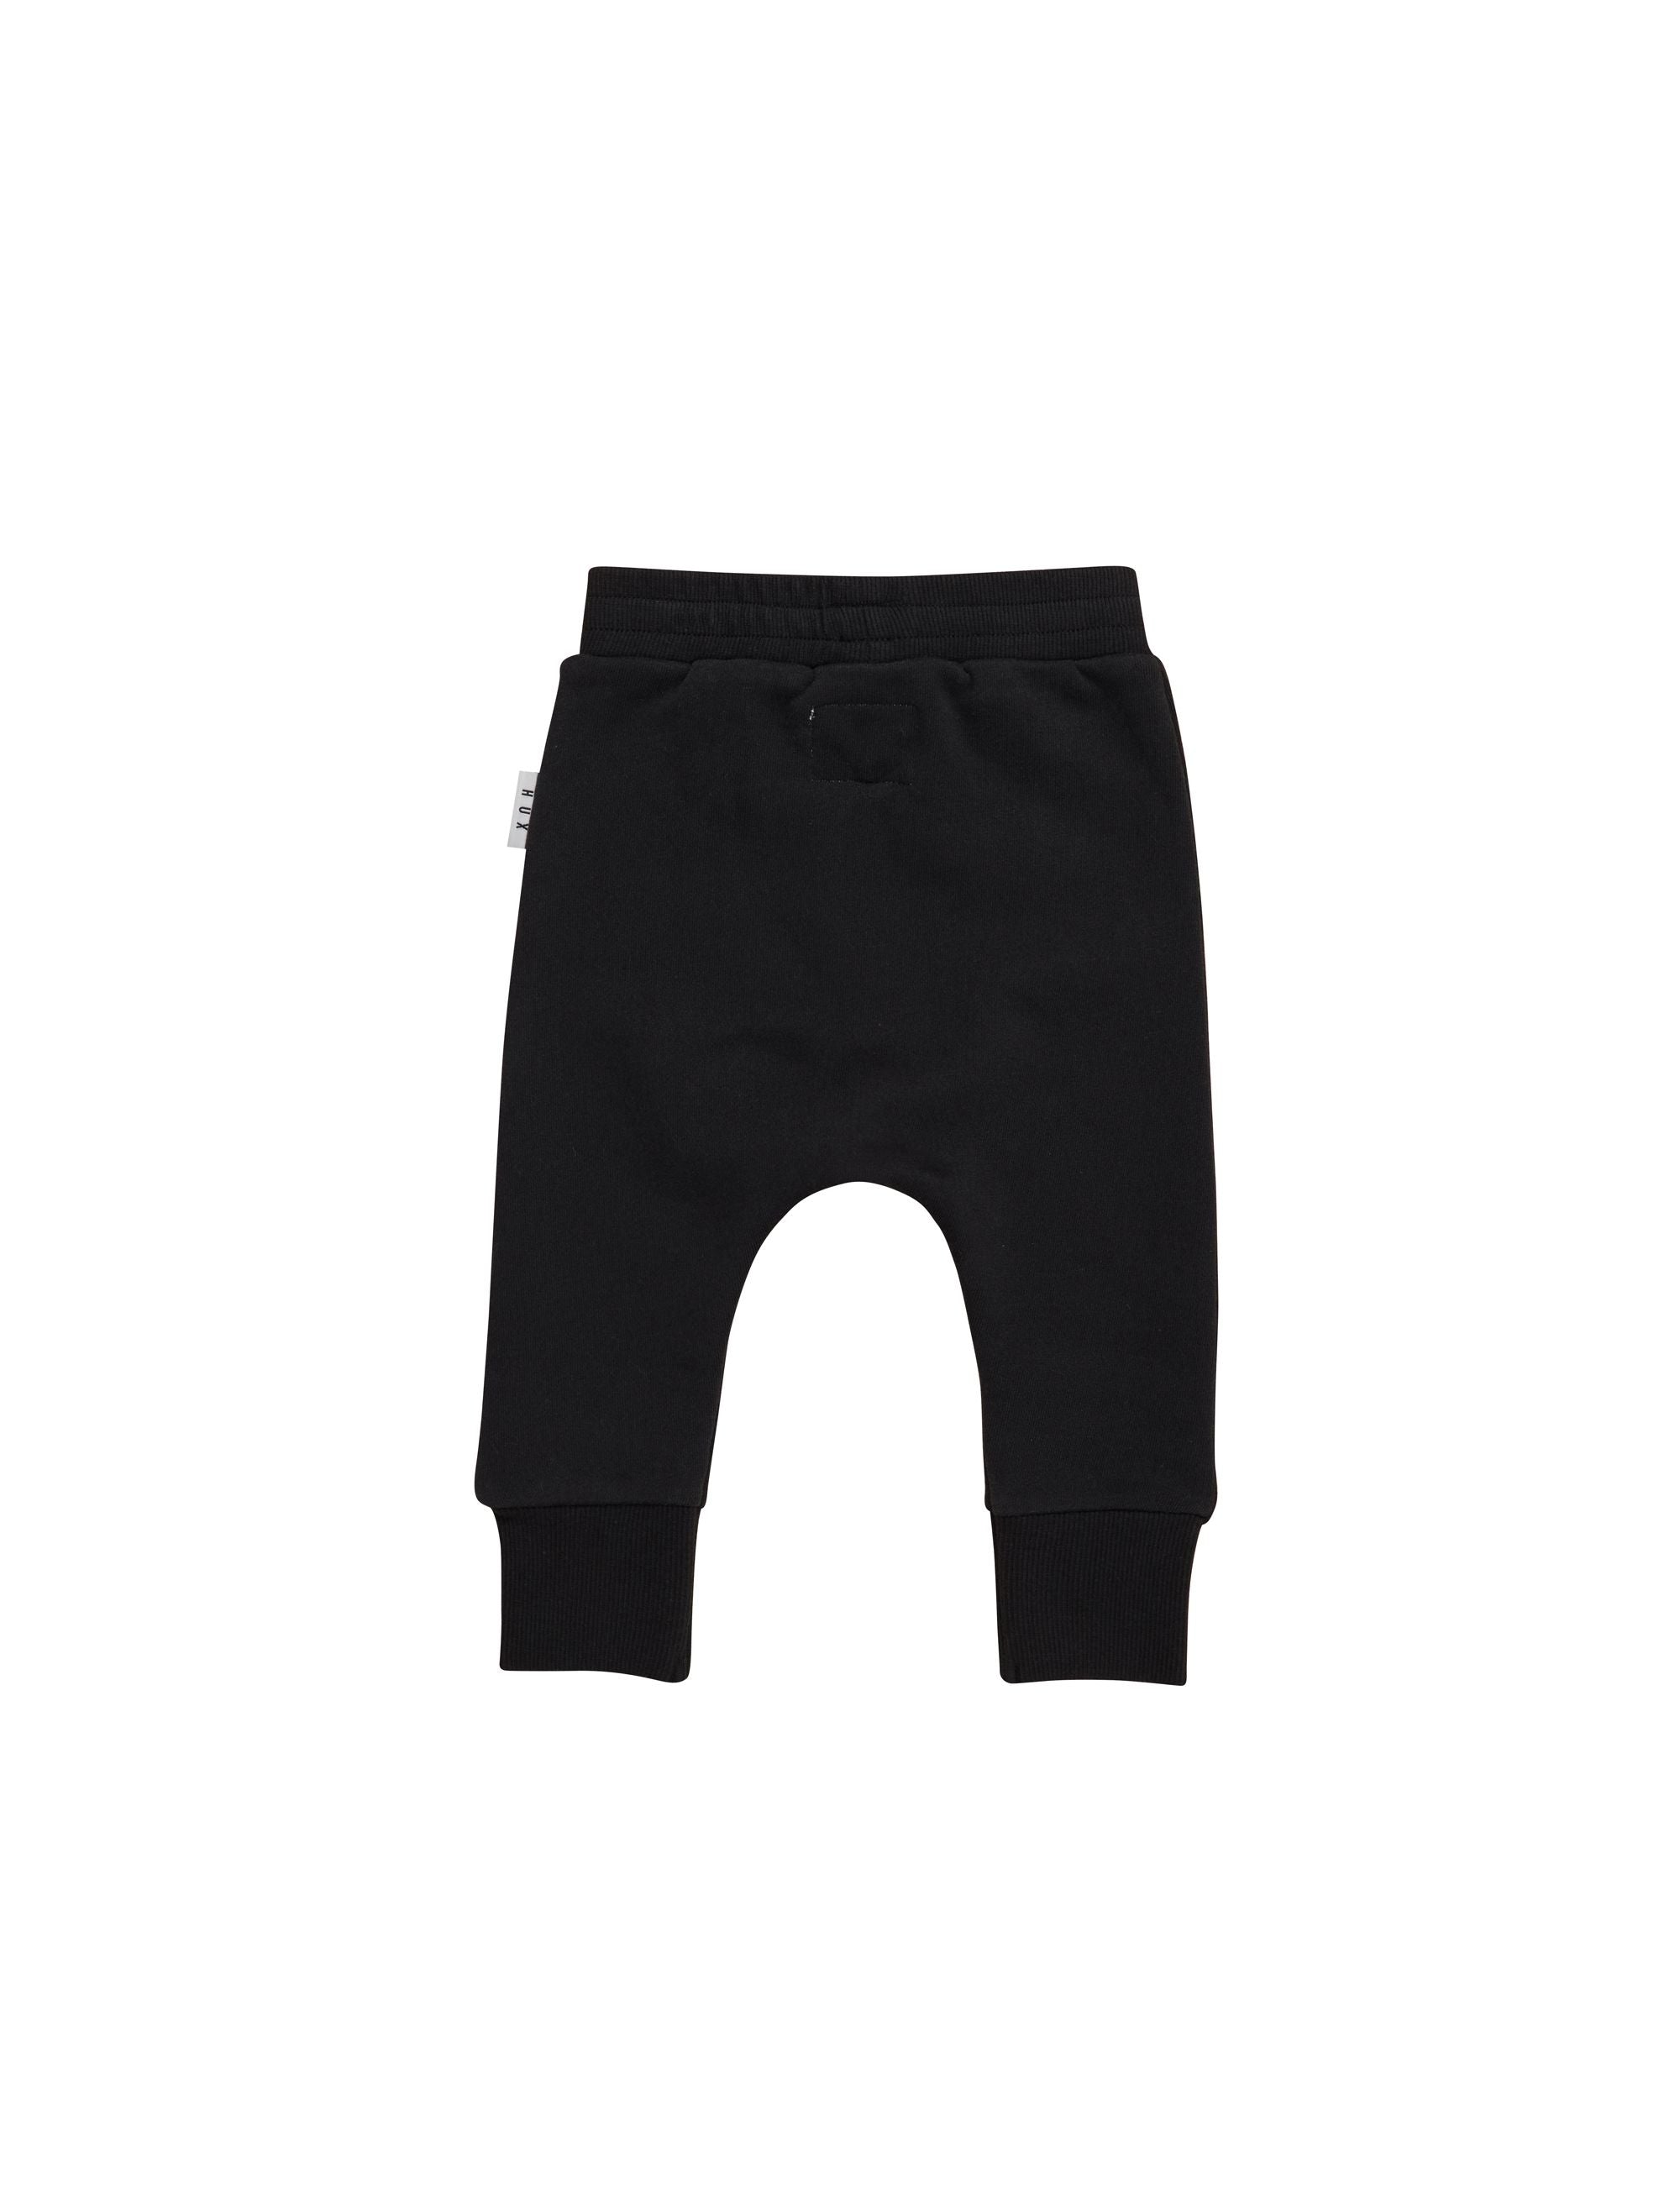 Huxbaby Boys Pants Black Fleece Drop Crotch Pant